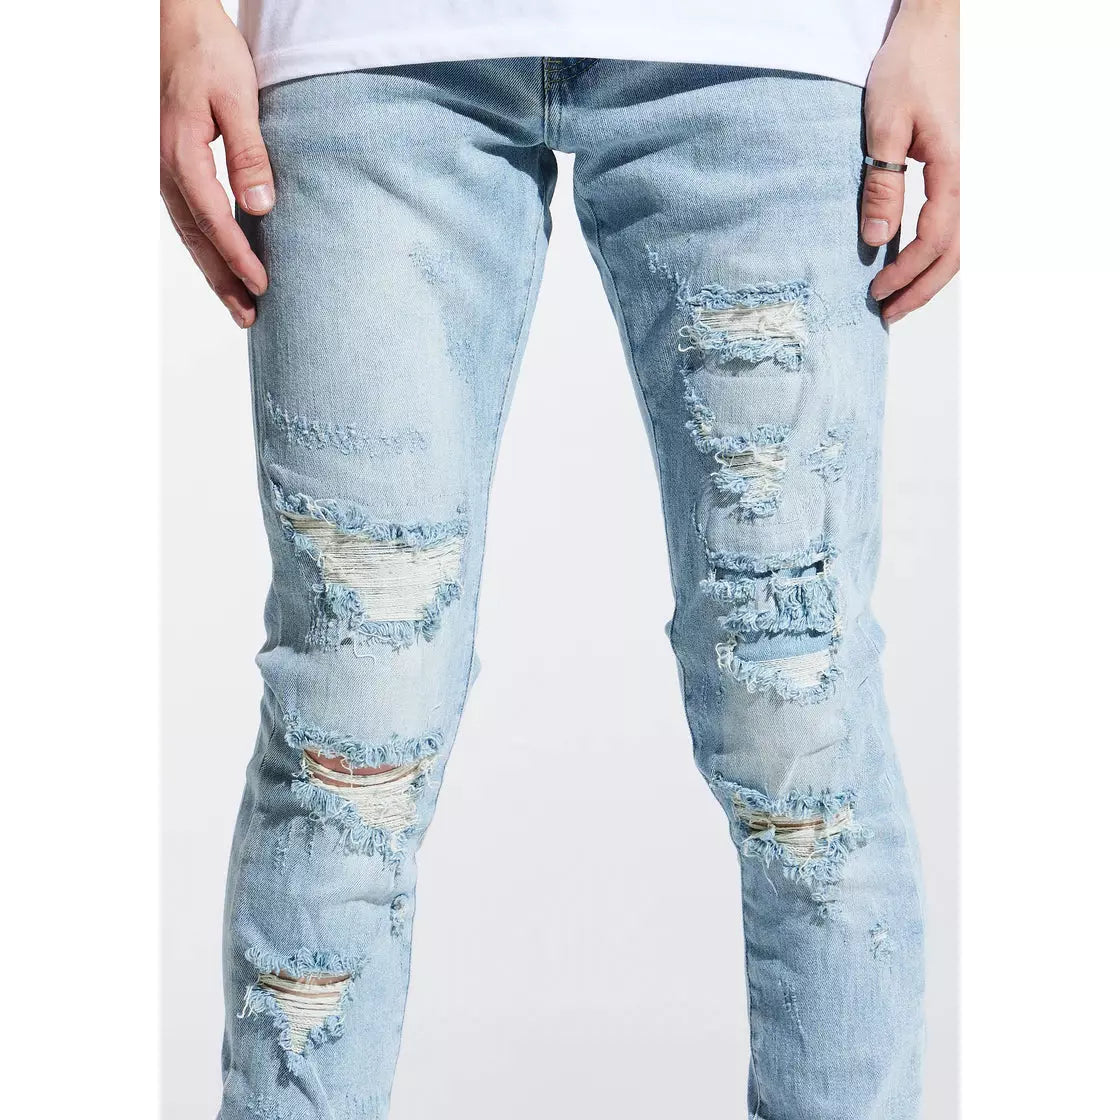 Crysp Denim Atlantic Blue Denim Jeans (CRYSPSP221-120)